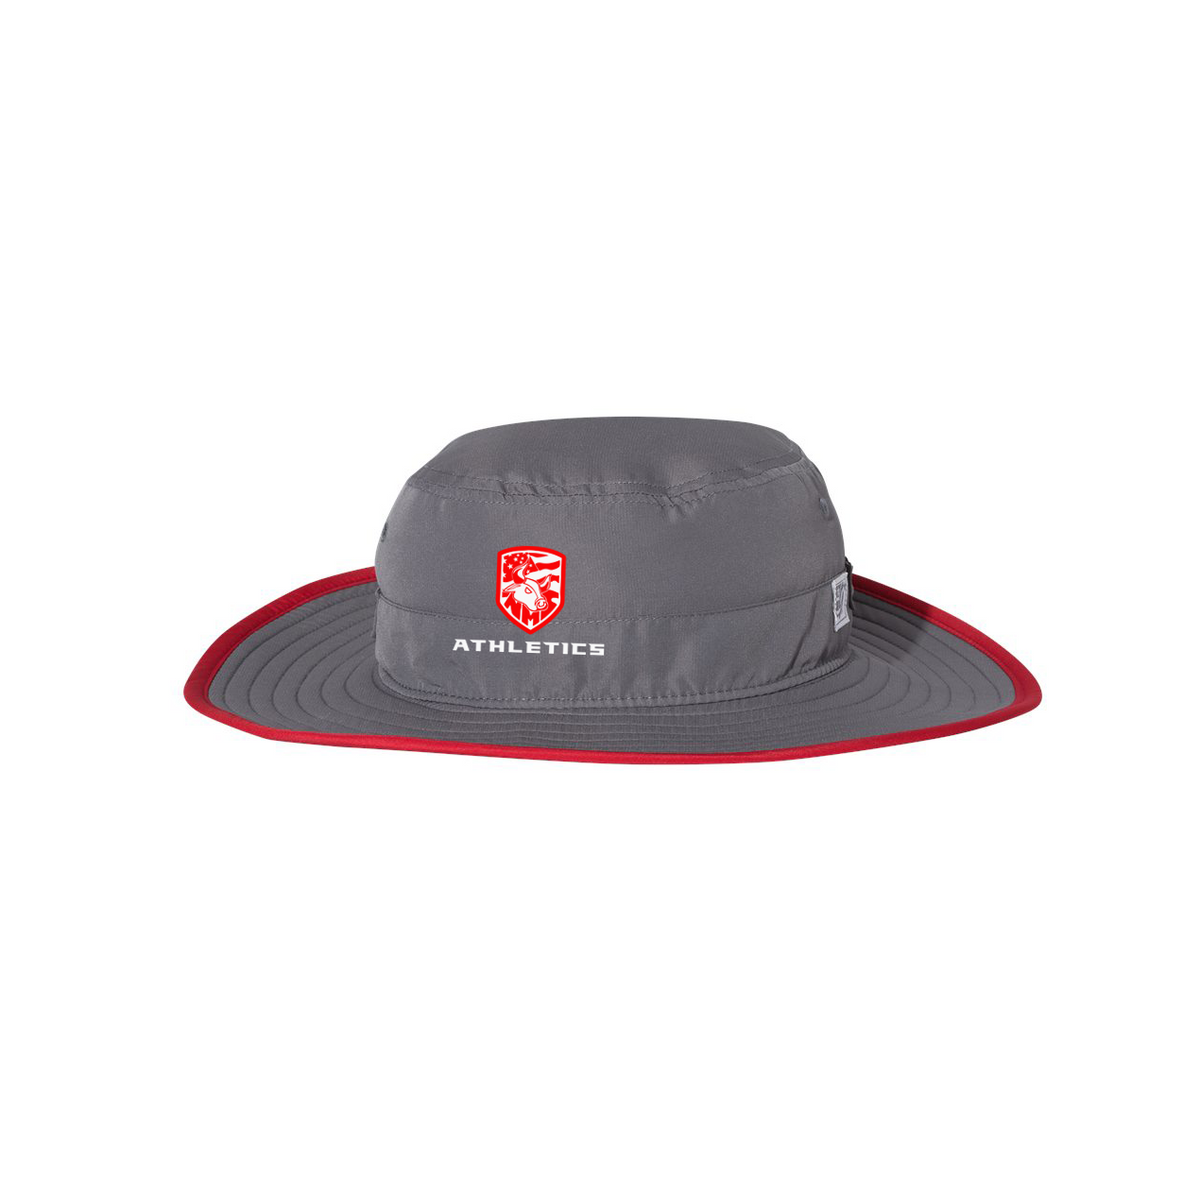 Nesaquake Middle School Athletics Bucket Hat